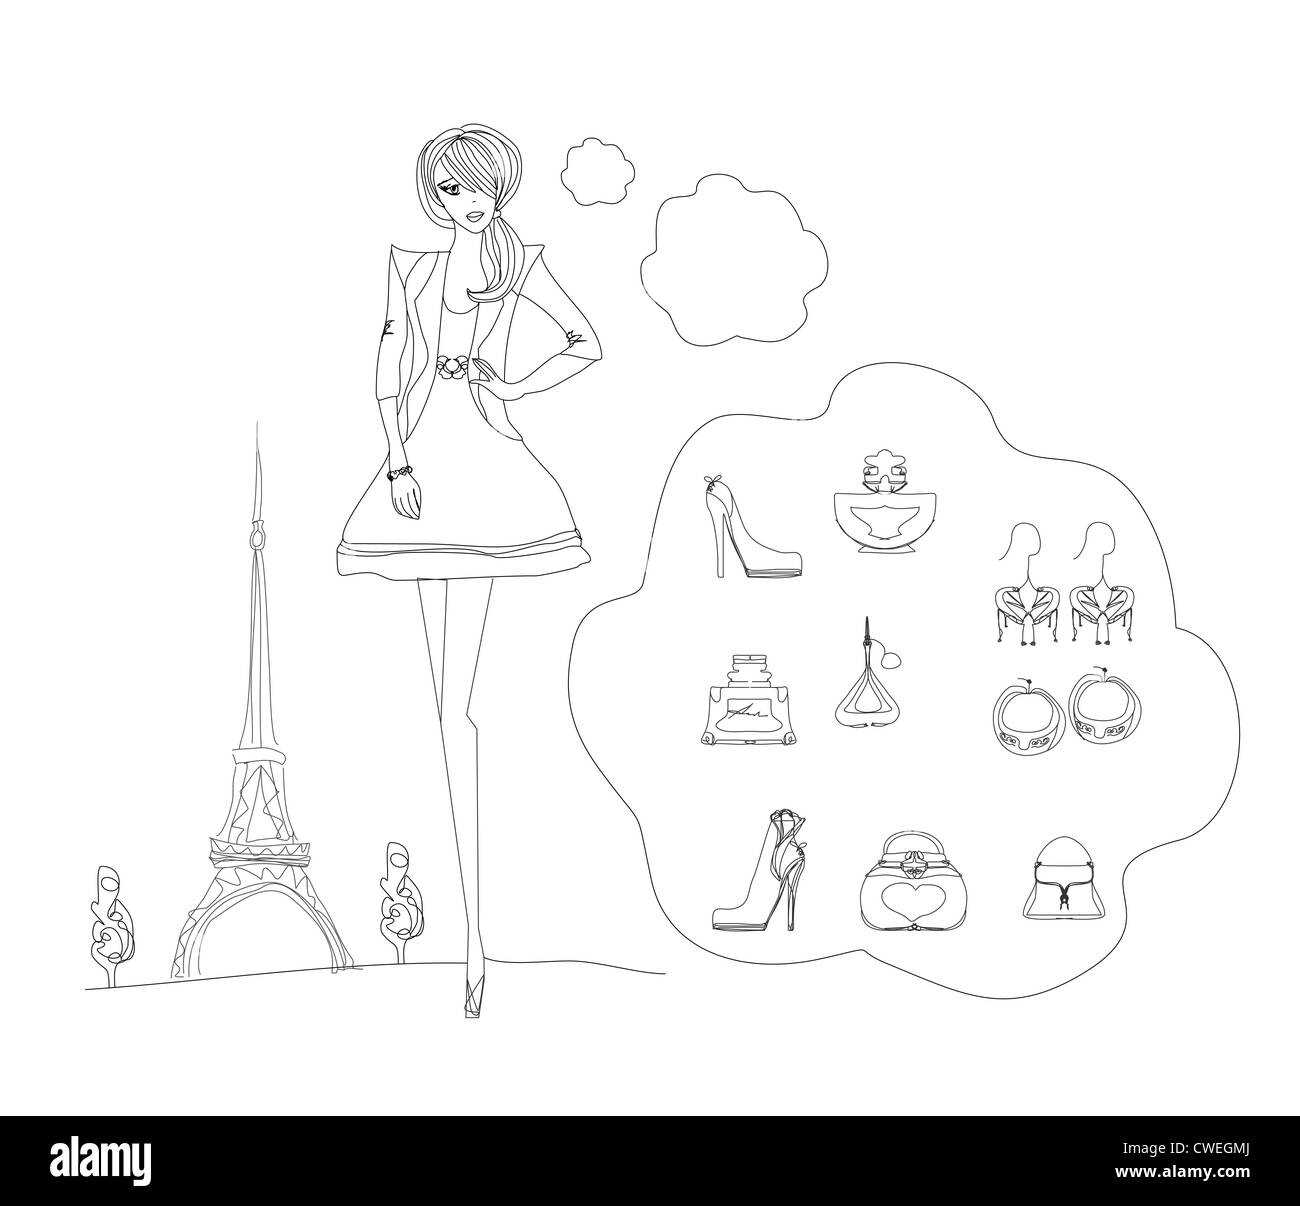 Paris fashion doodles set Stock Photo - Alamy